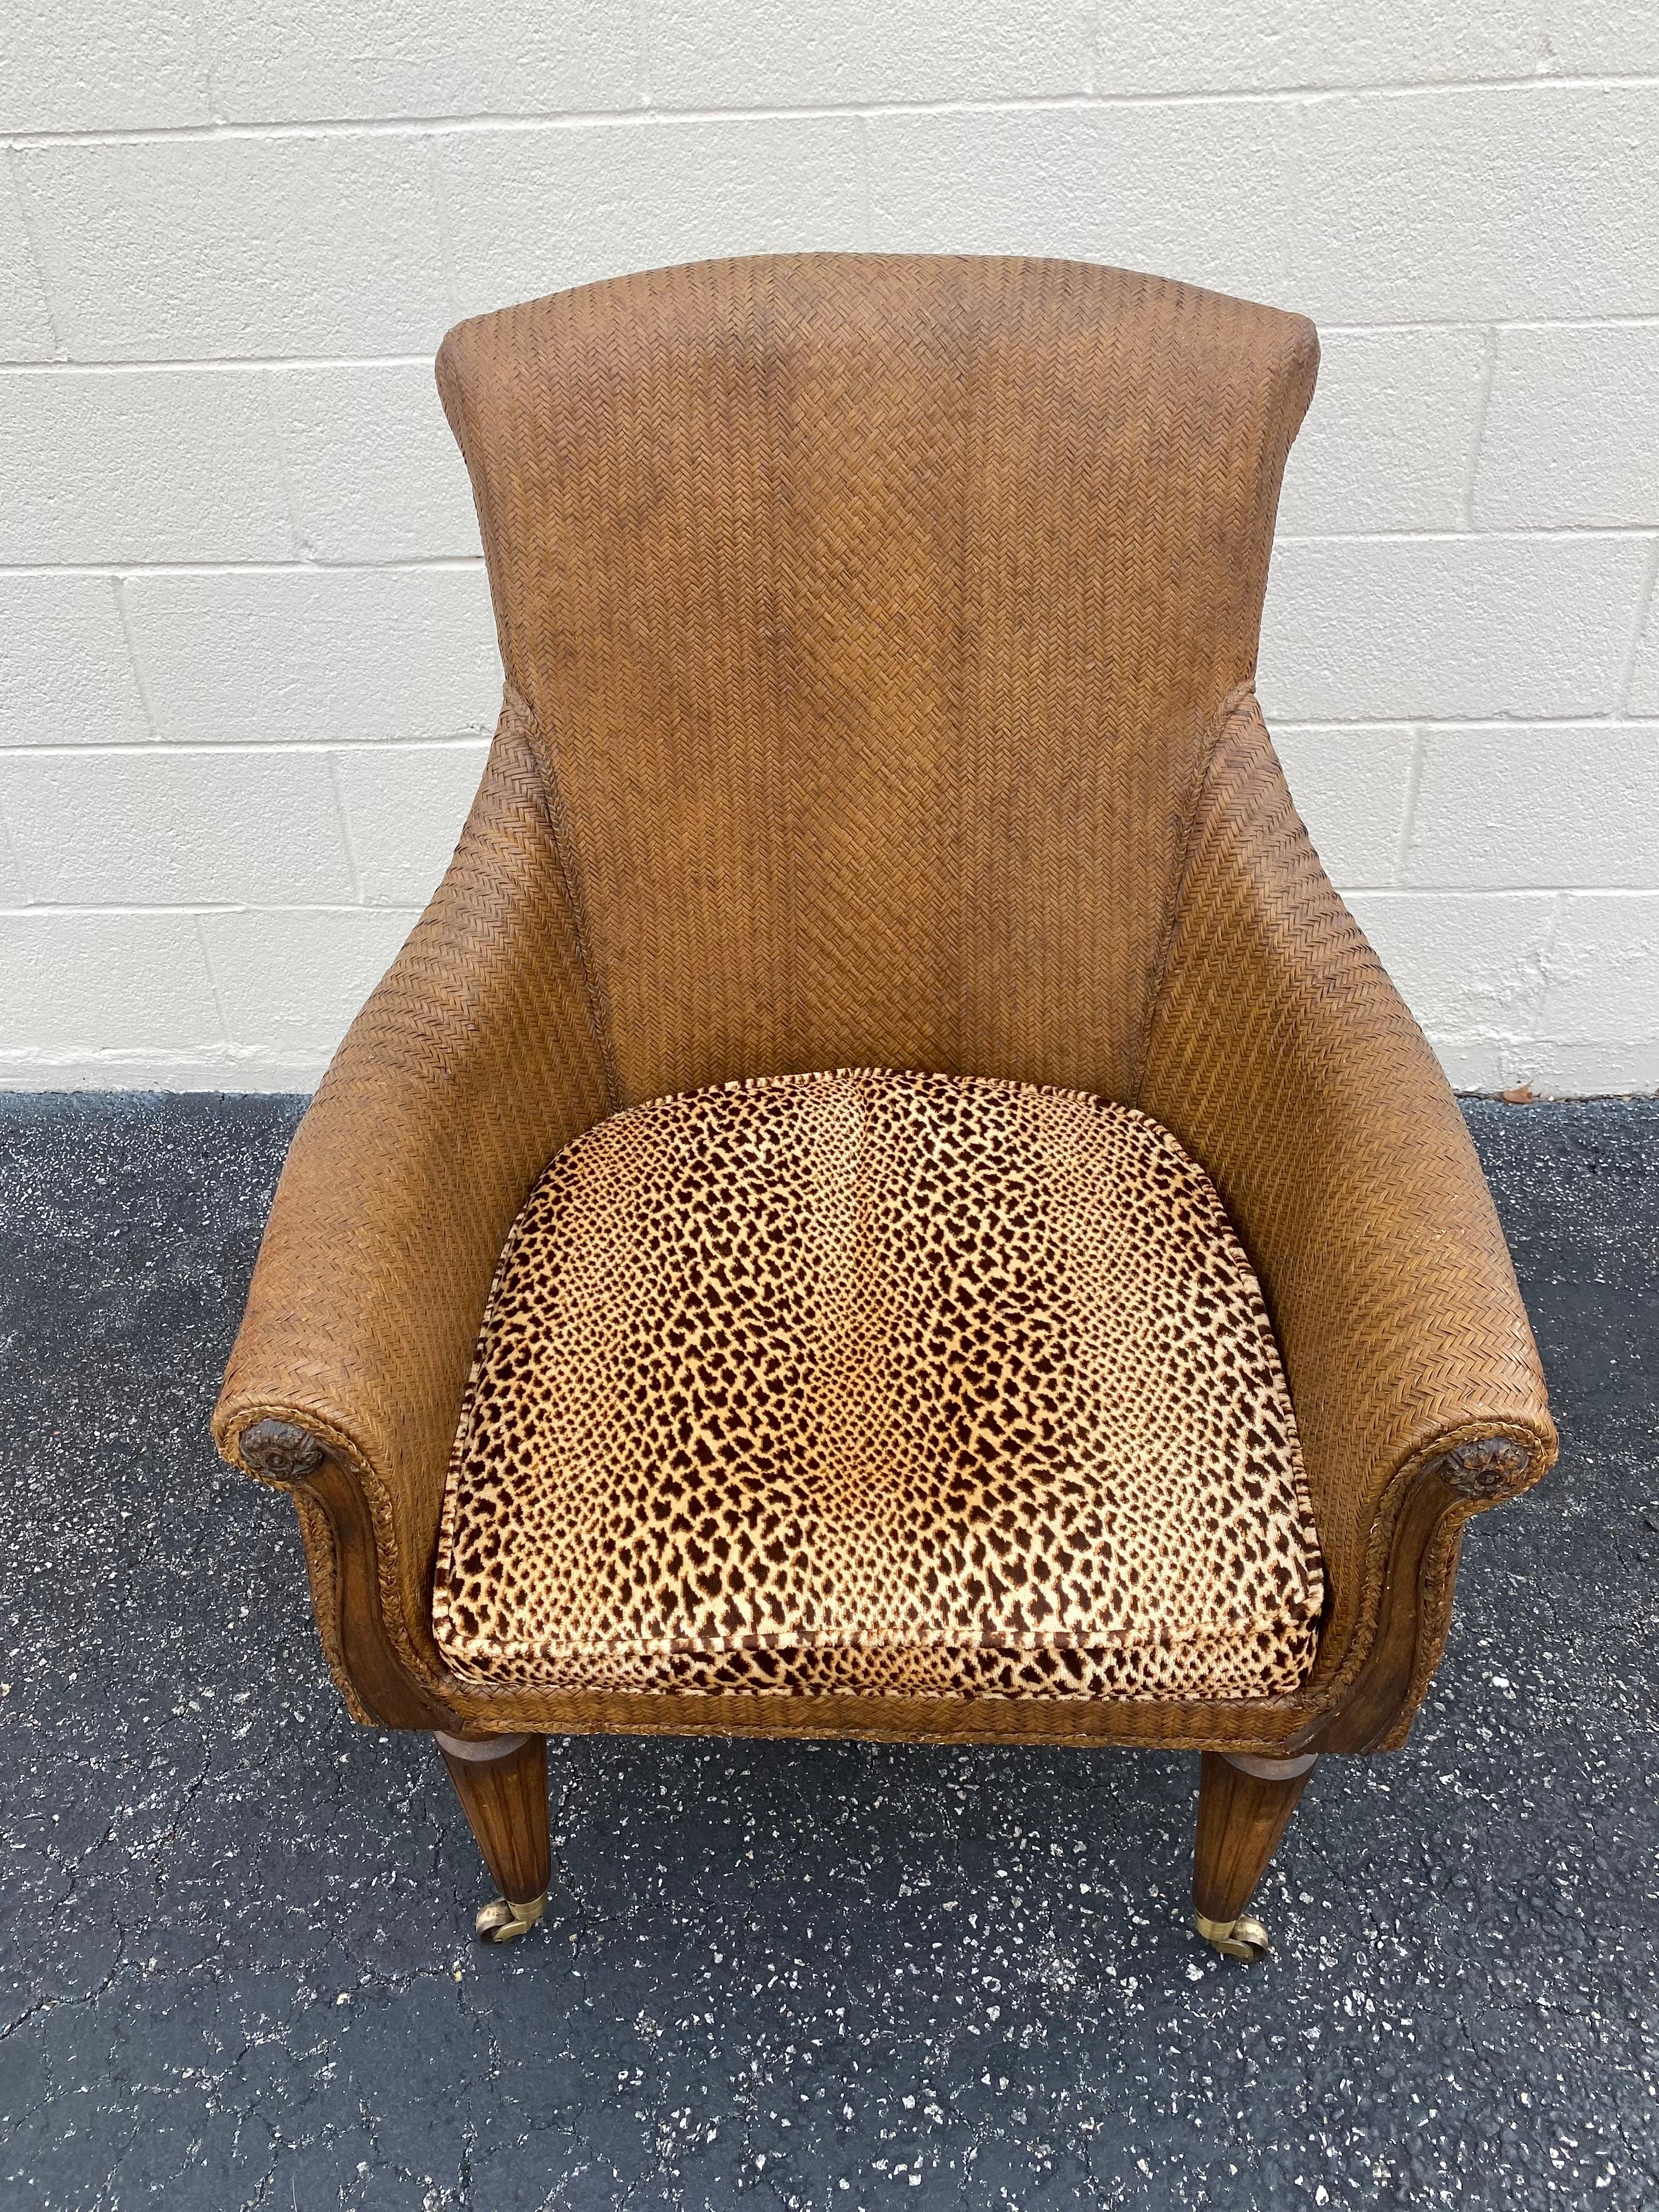 American Lane Furniture Rattan Wood Leopard Chair on Castors For Sale